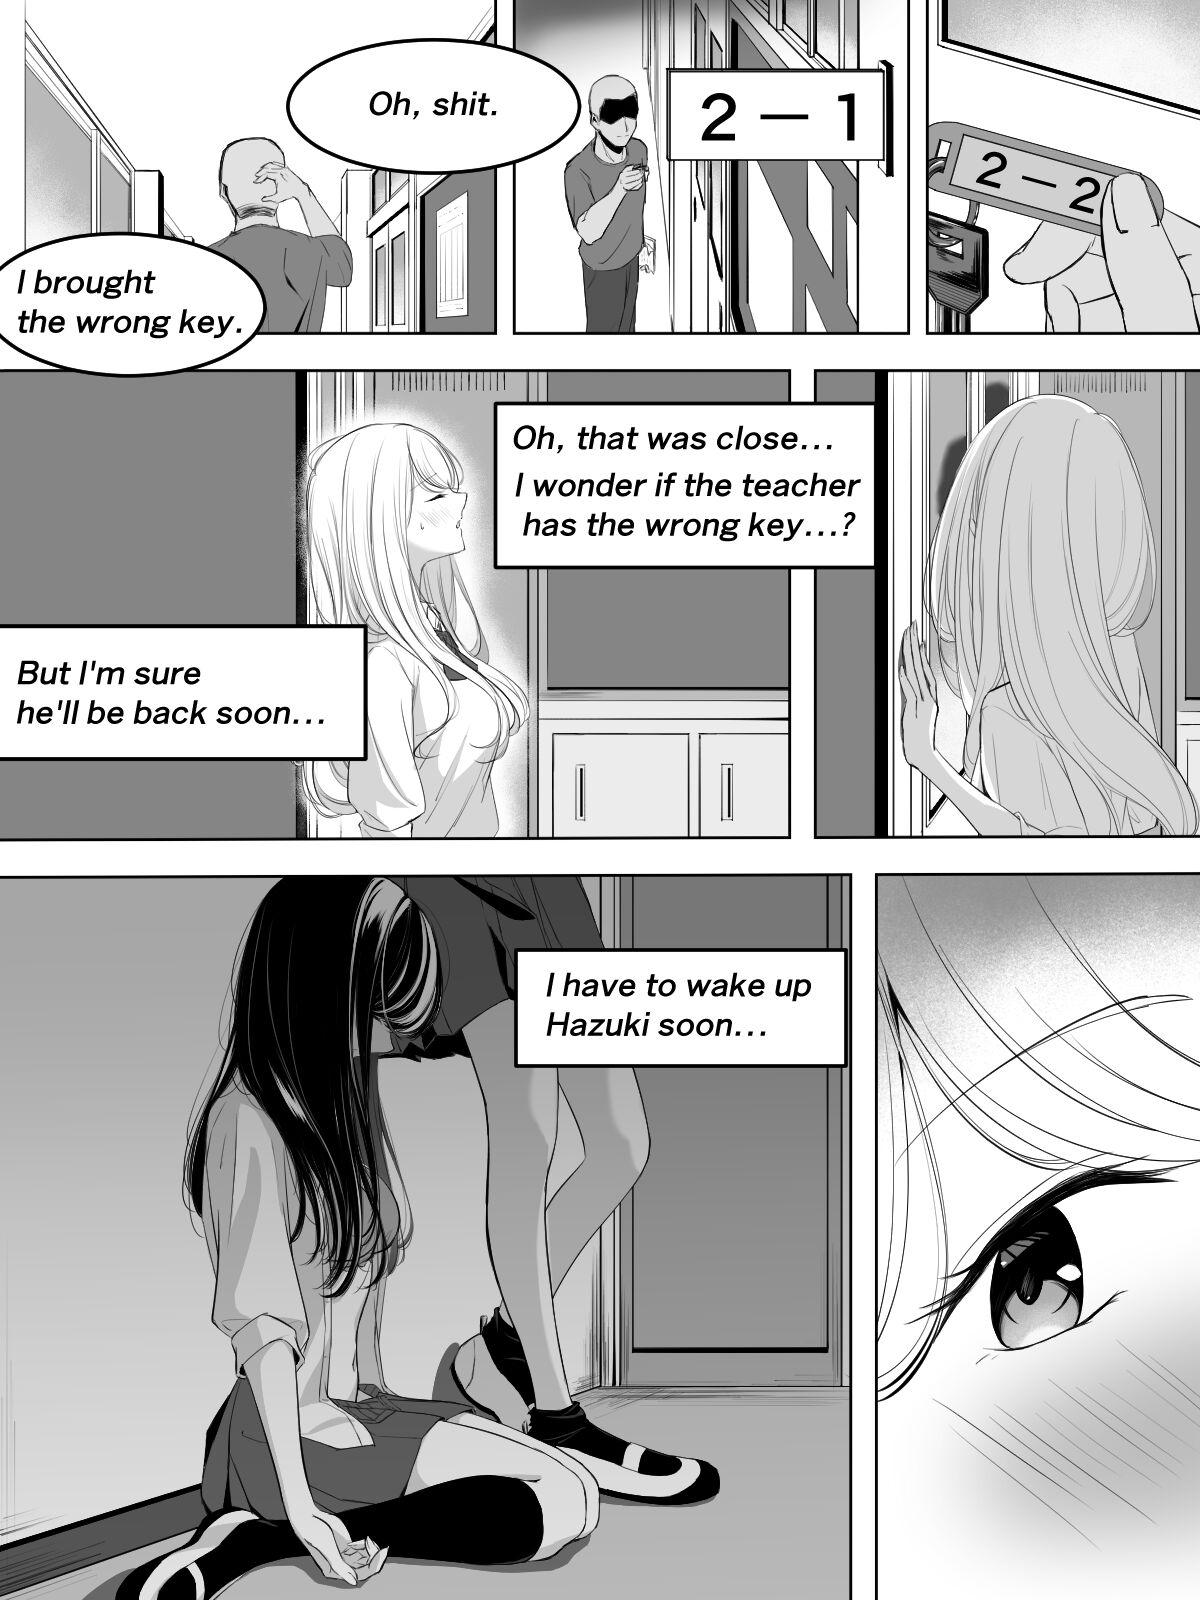 Yuri comic Part 1,2 and 3. 17